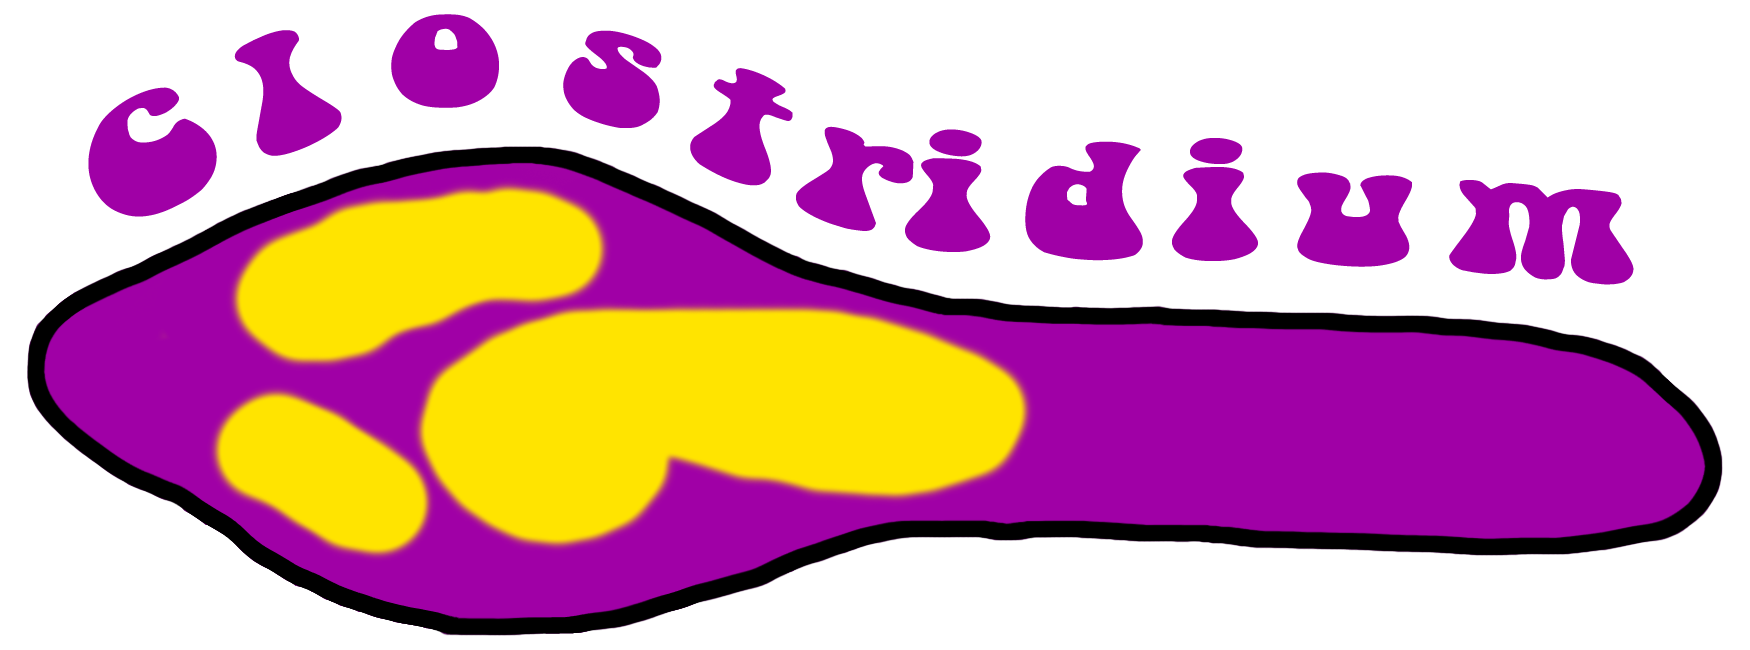 clostridiumrecords logo